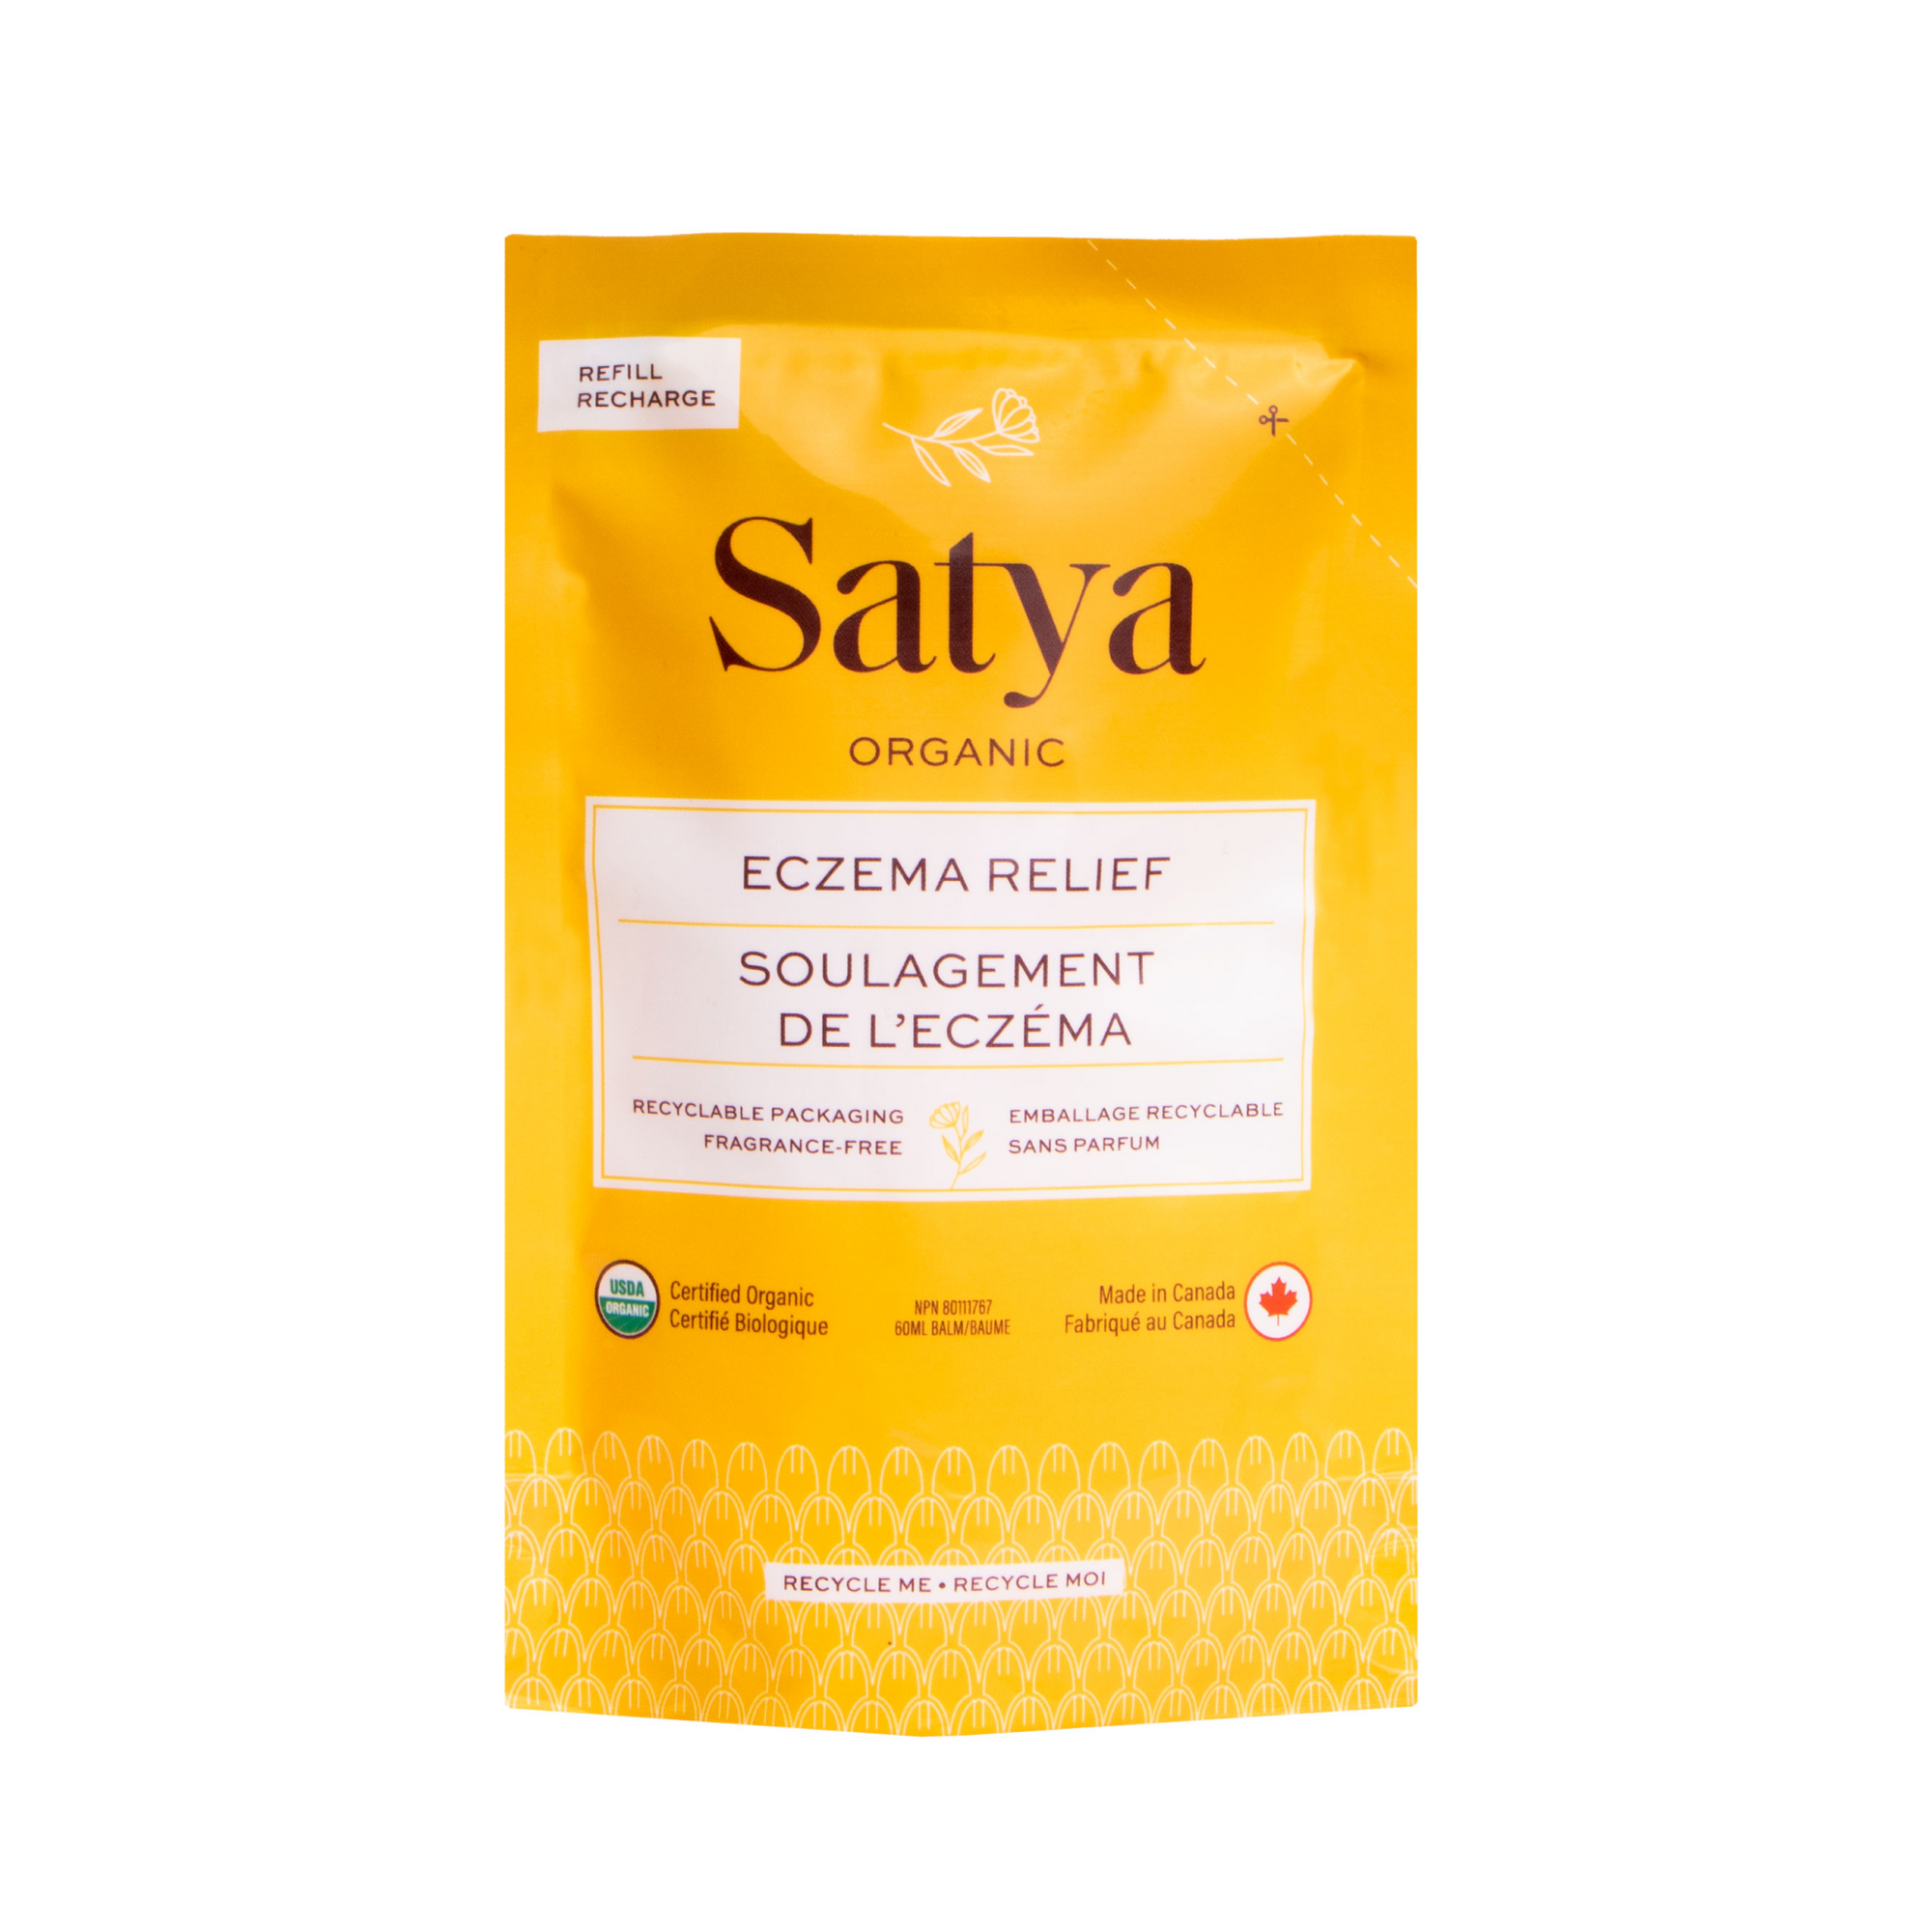 Satya Eczema Relief Refill Pouch